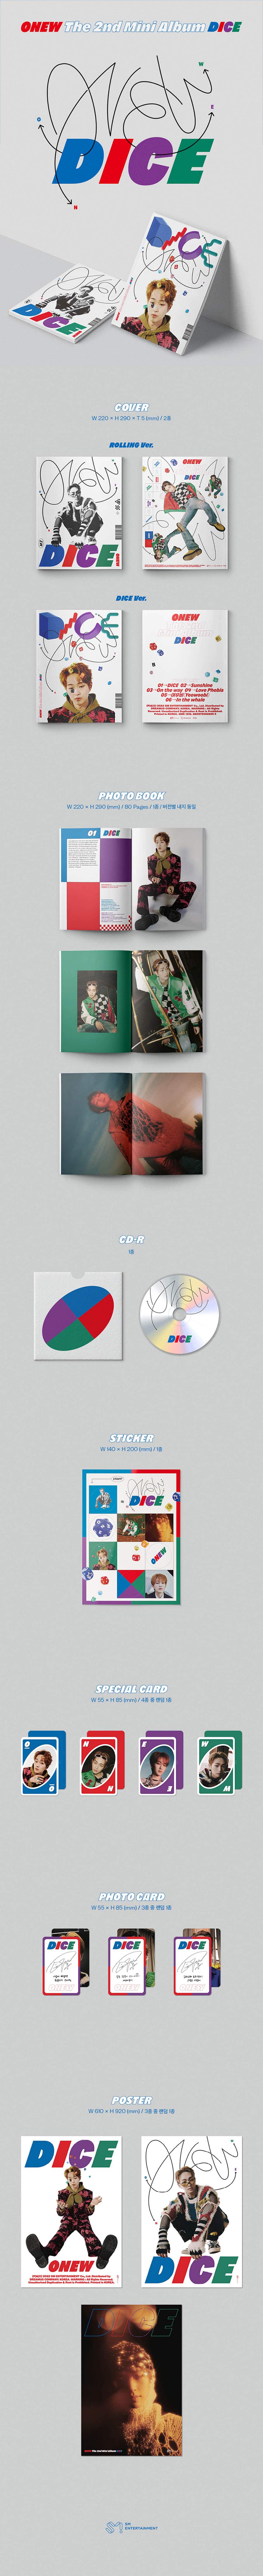 onew-2nd-mini-album-dice-photobook-wholesale